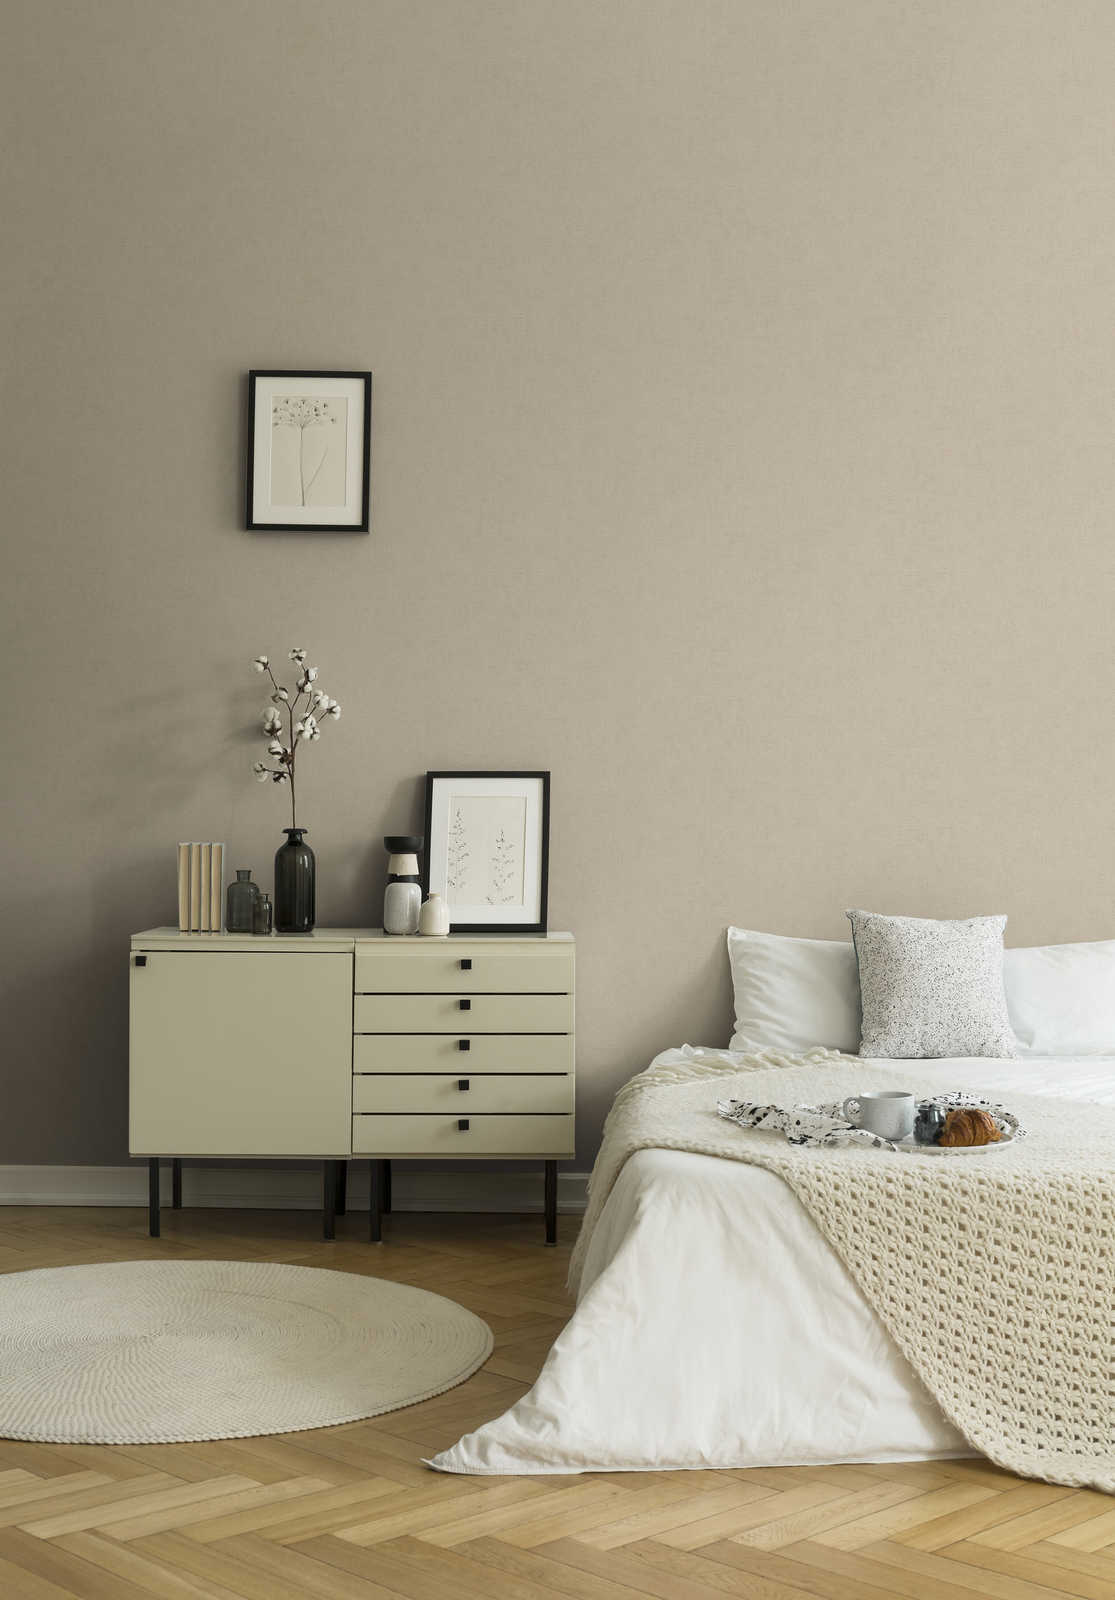             Plain wallpaper with structure & glitter effect - beige, brown, metallic
        